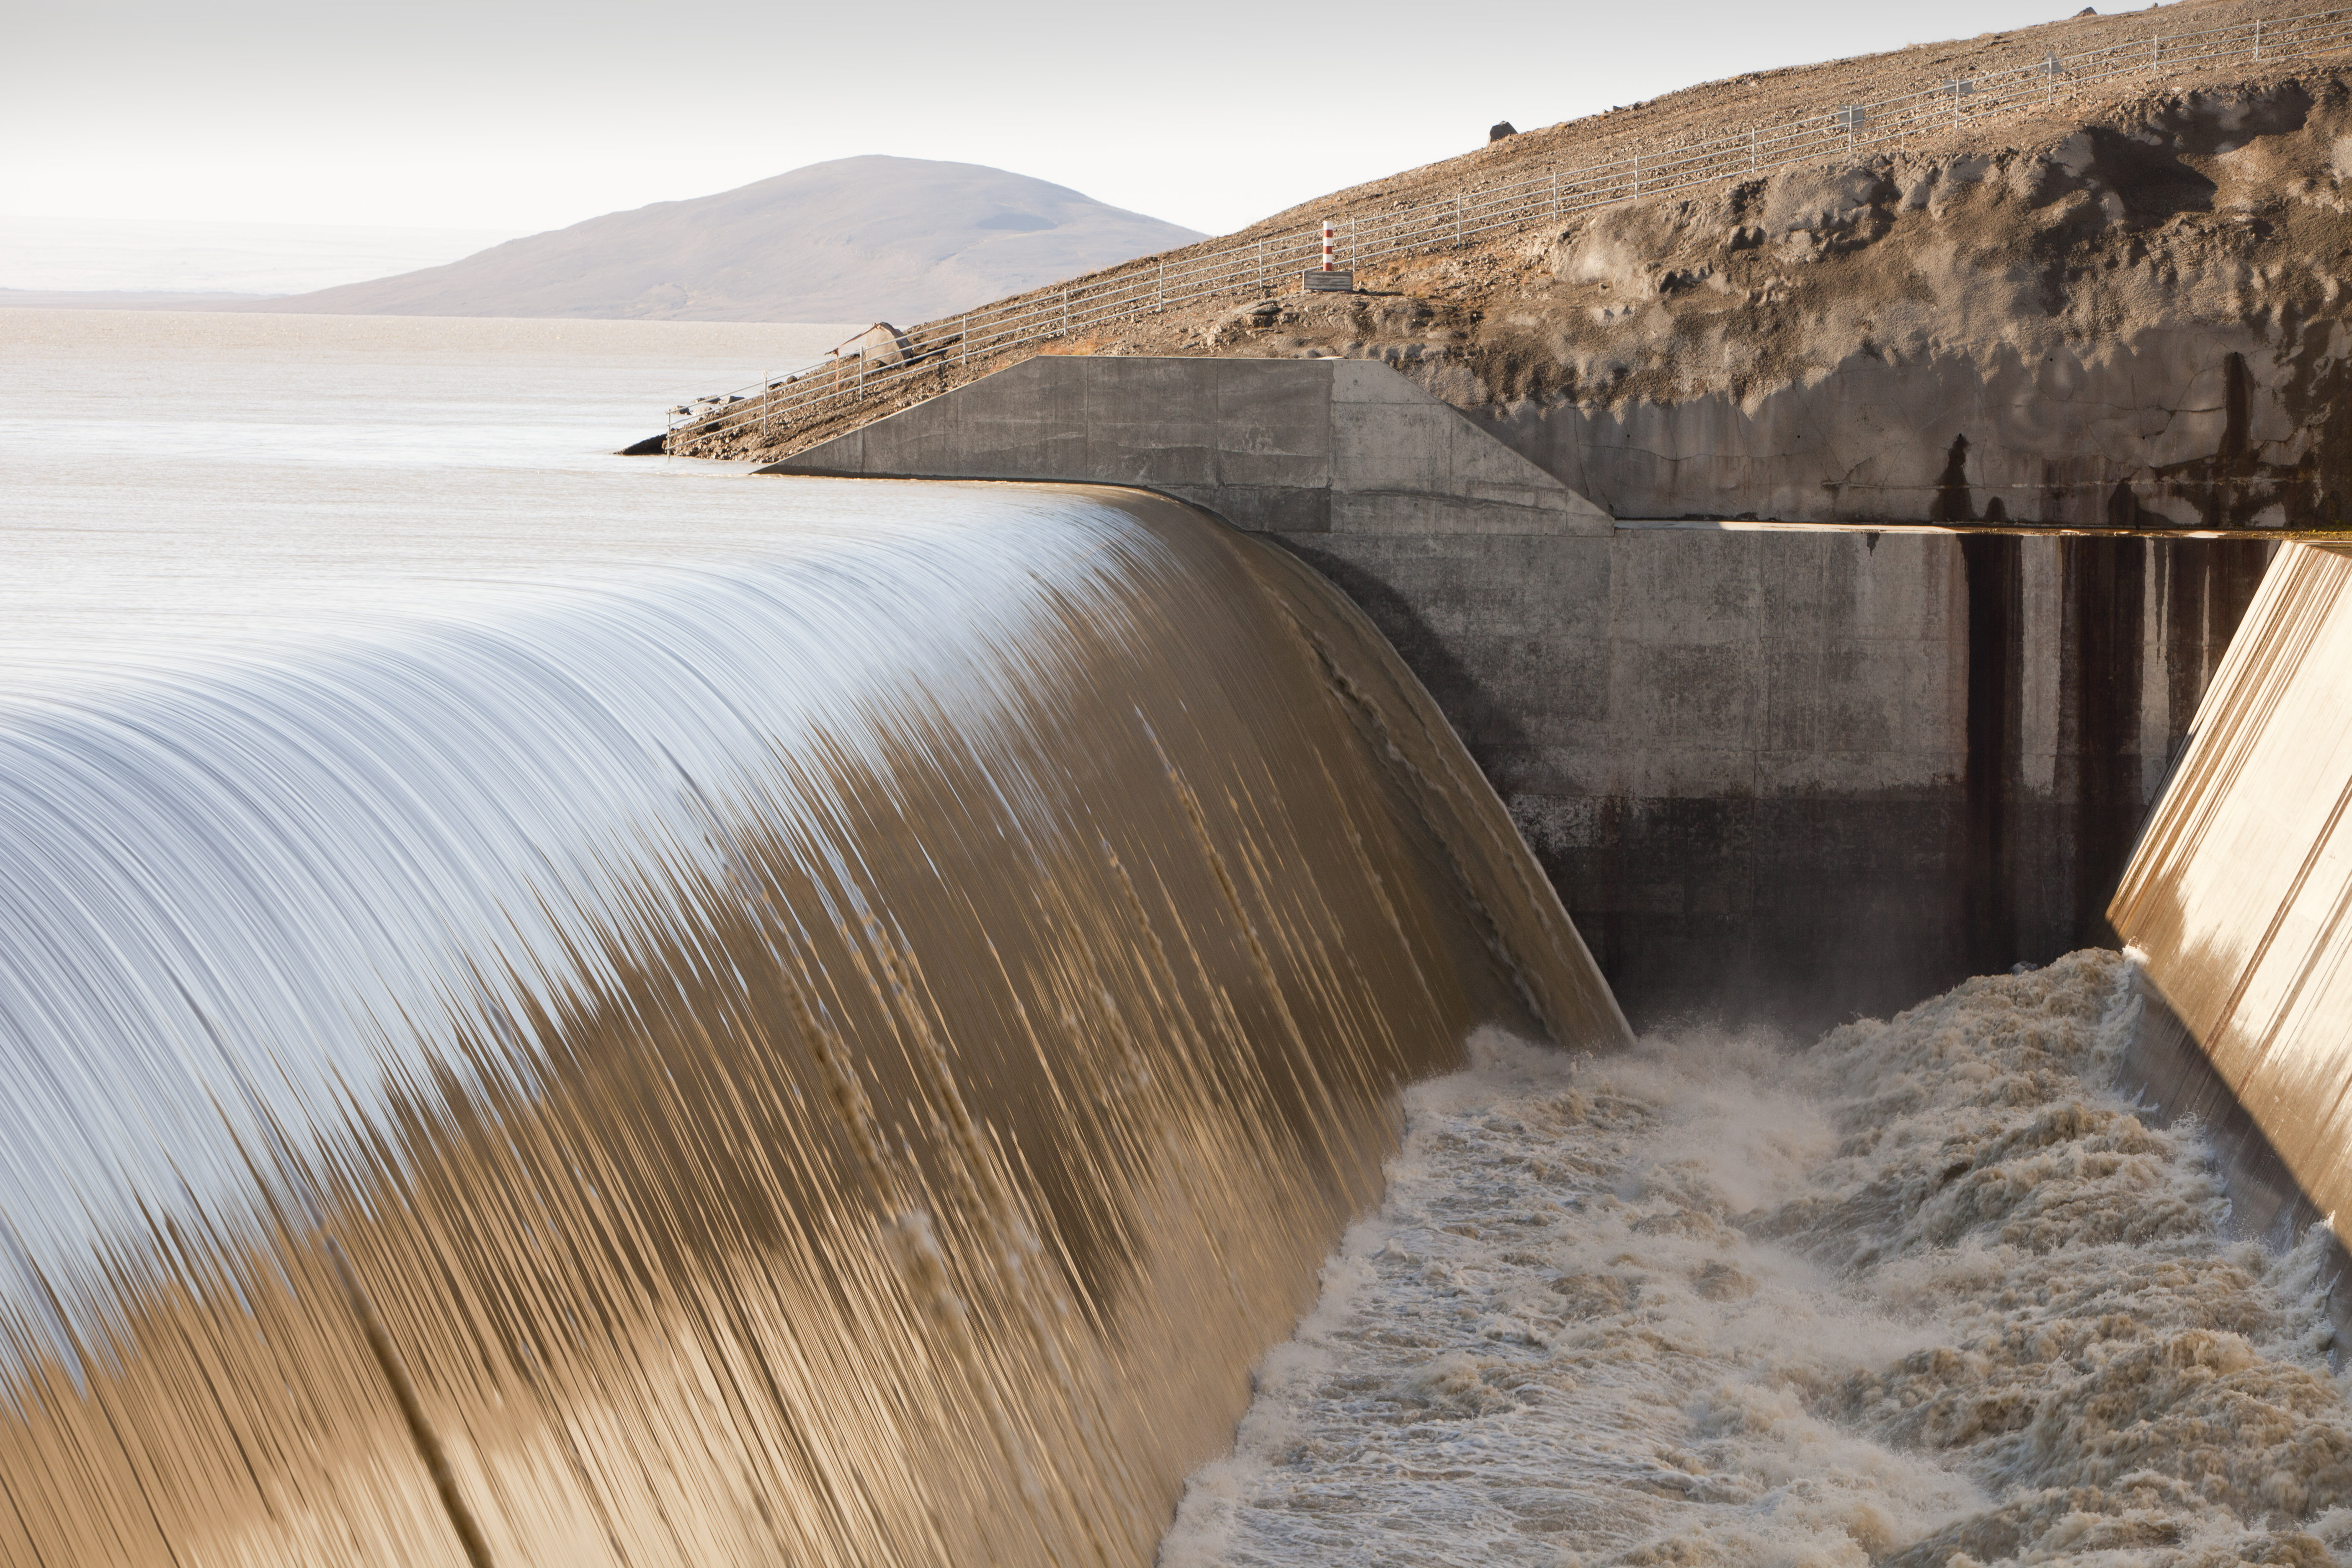 Karahnjukar dam, the largest hydropower dam in Europe, in East Iceland